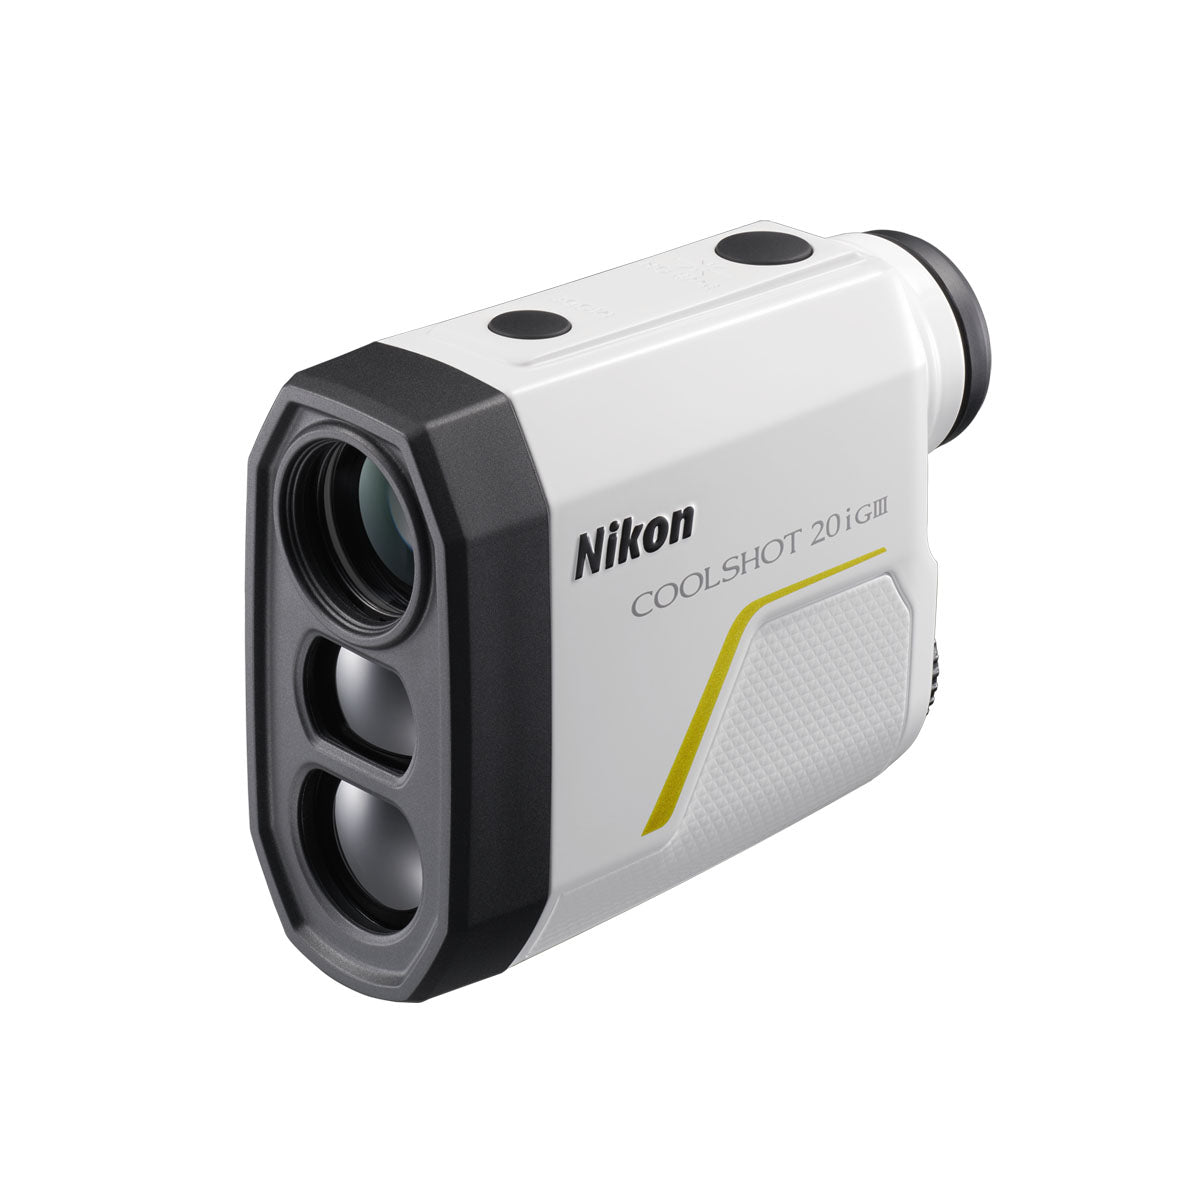 Nikon Coolshot 20I GIII Golf Laser Rangefinder 5-730m PRE-ORDER